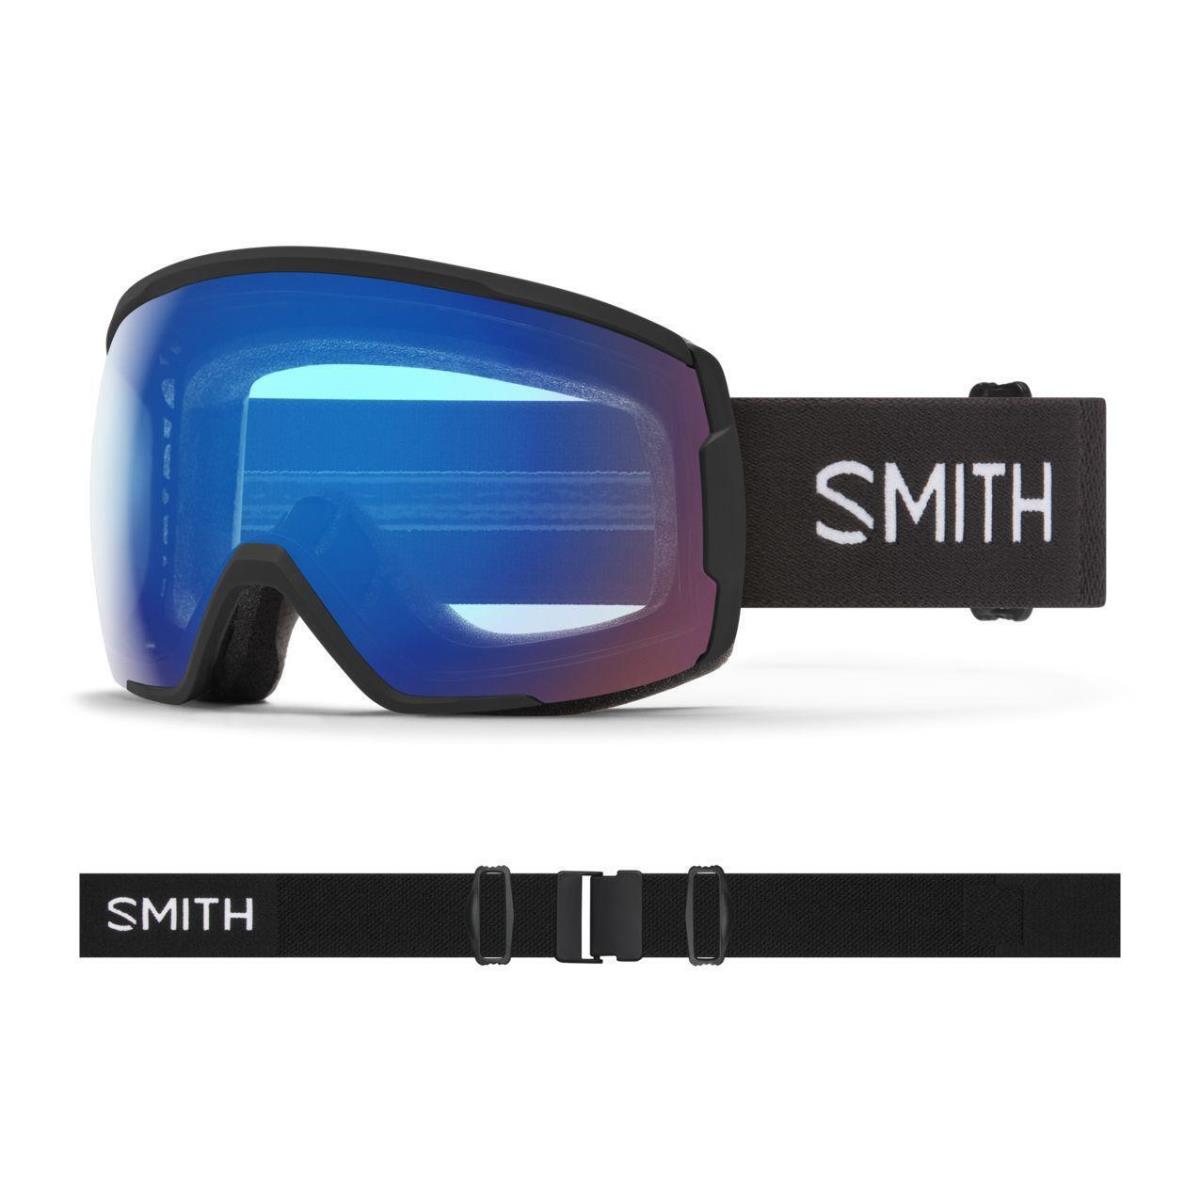 Smith Proxy Goggles Black - Chromapop Storm Rose Flash